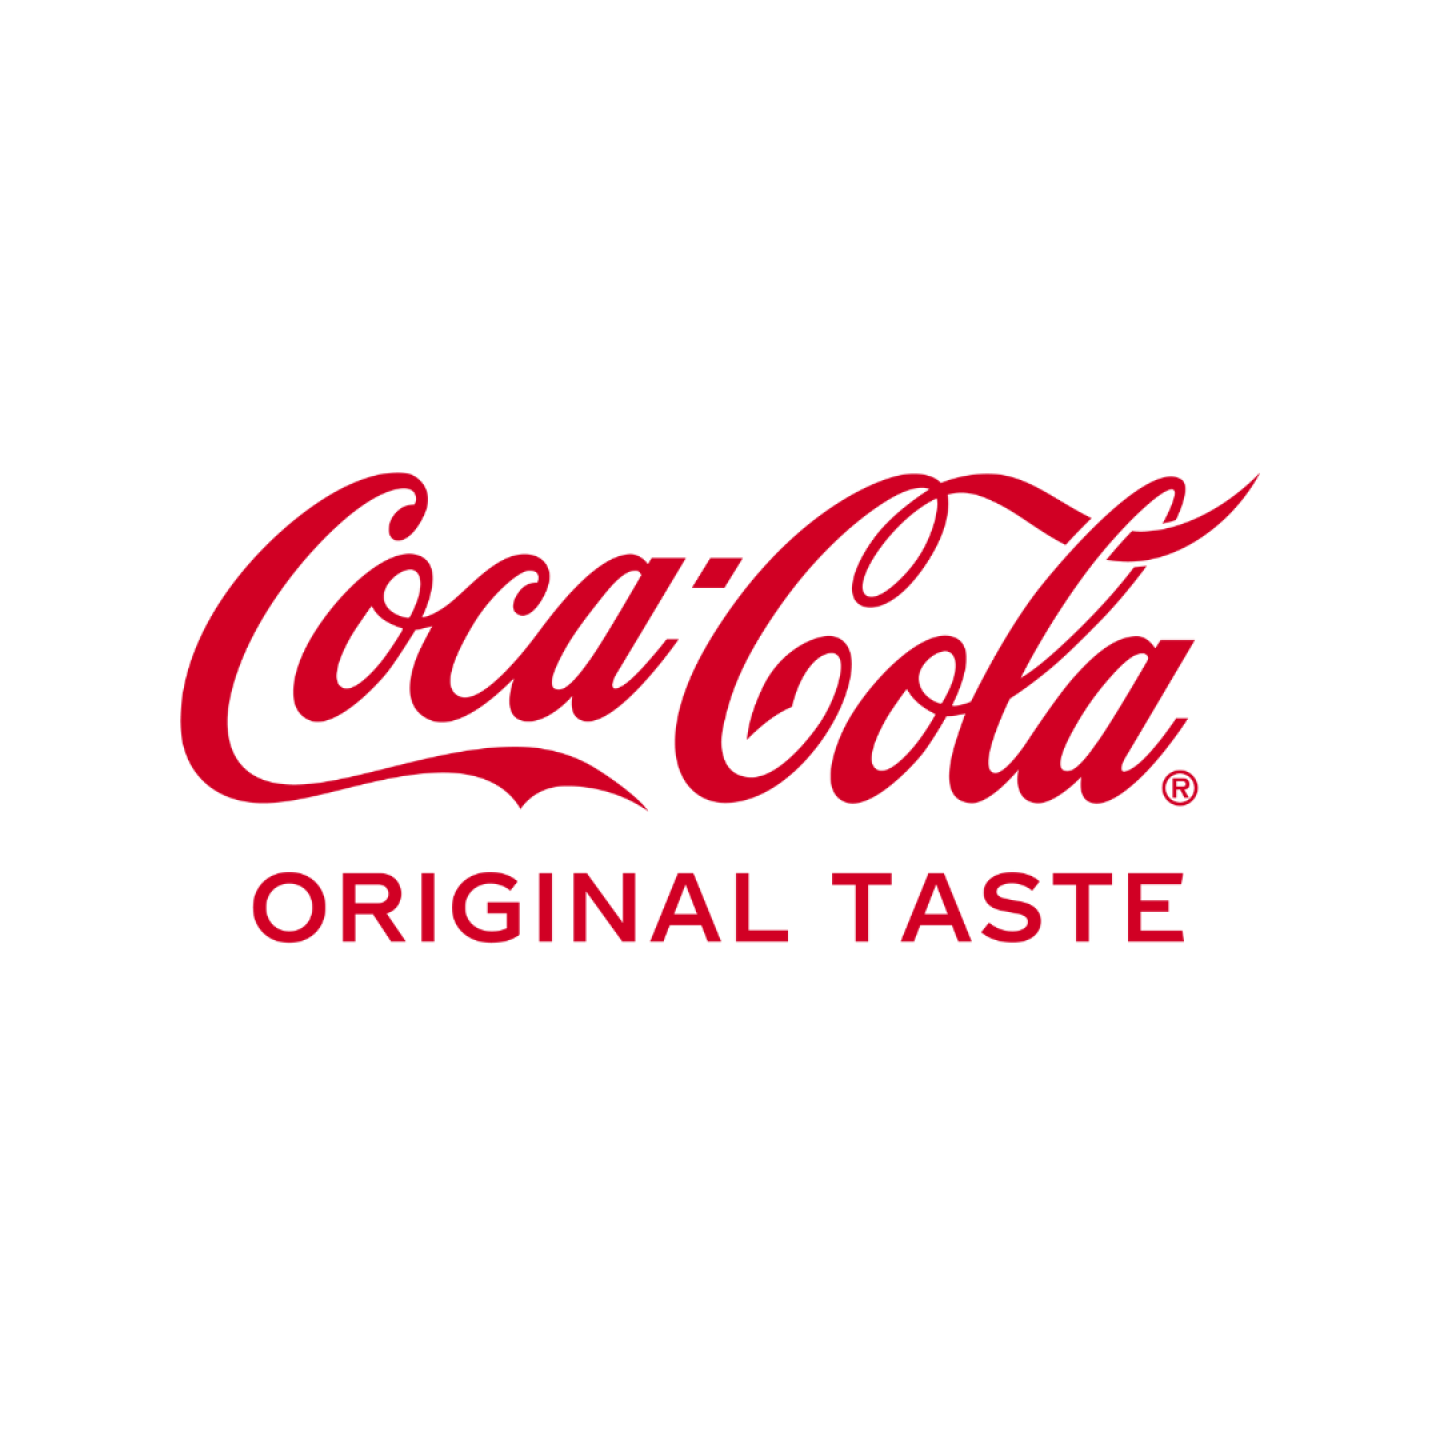 Coca-Cola - 2002 FIFA World Cup logo, Vector Logo of Coca-Cola - 2002 FIFA  World Cup brand free download (eps, ai, png, cdr) formats